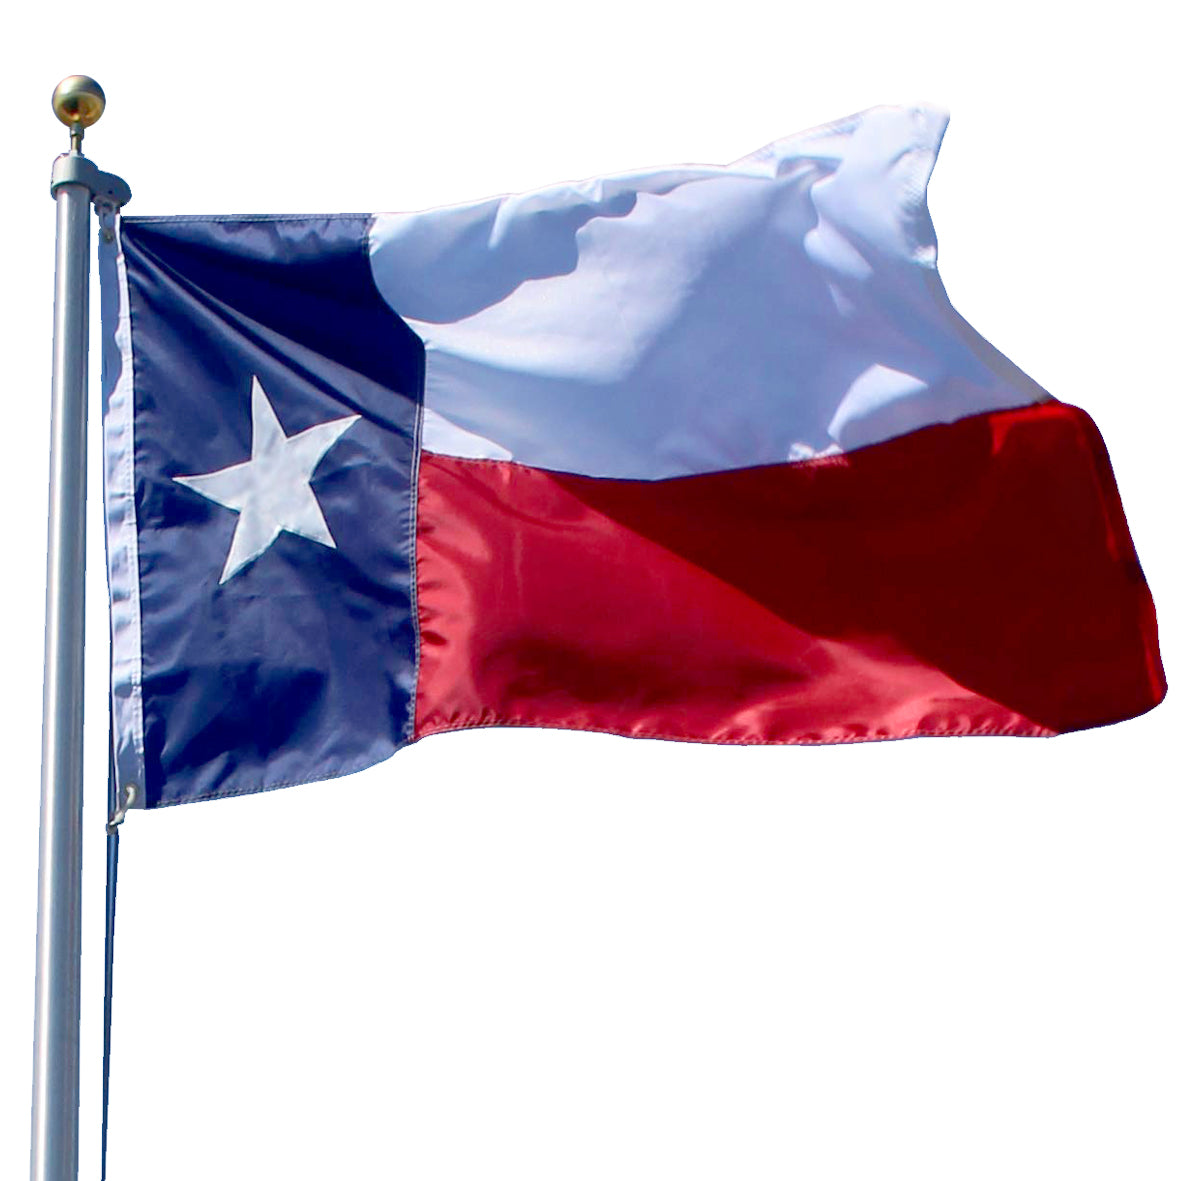 3' x 5' Texas Flag - Polyester